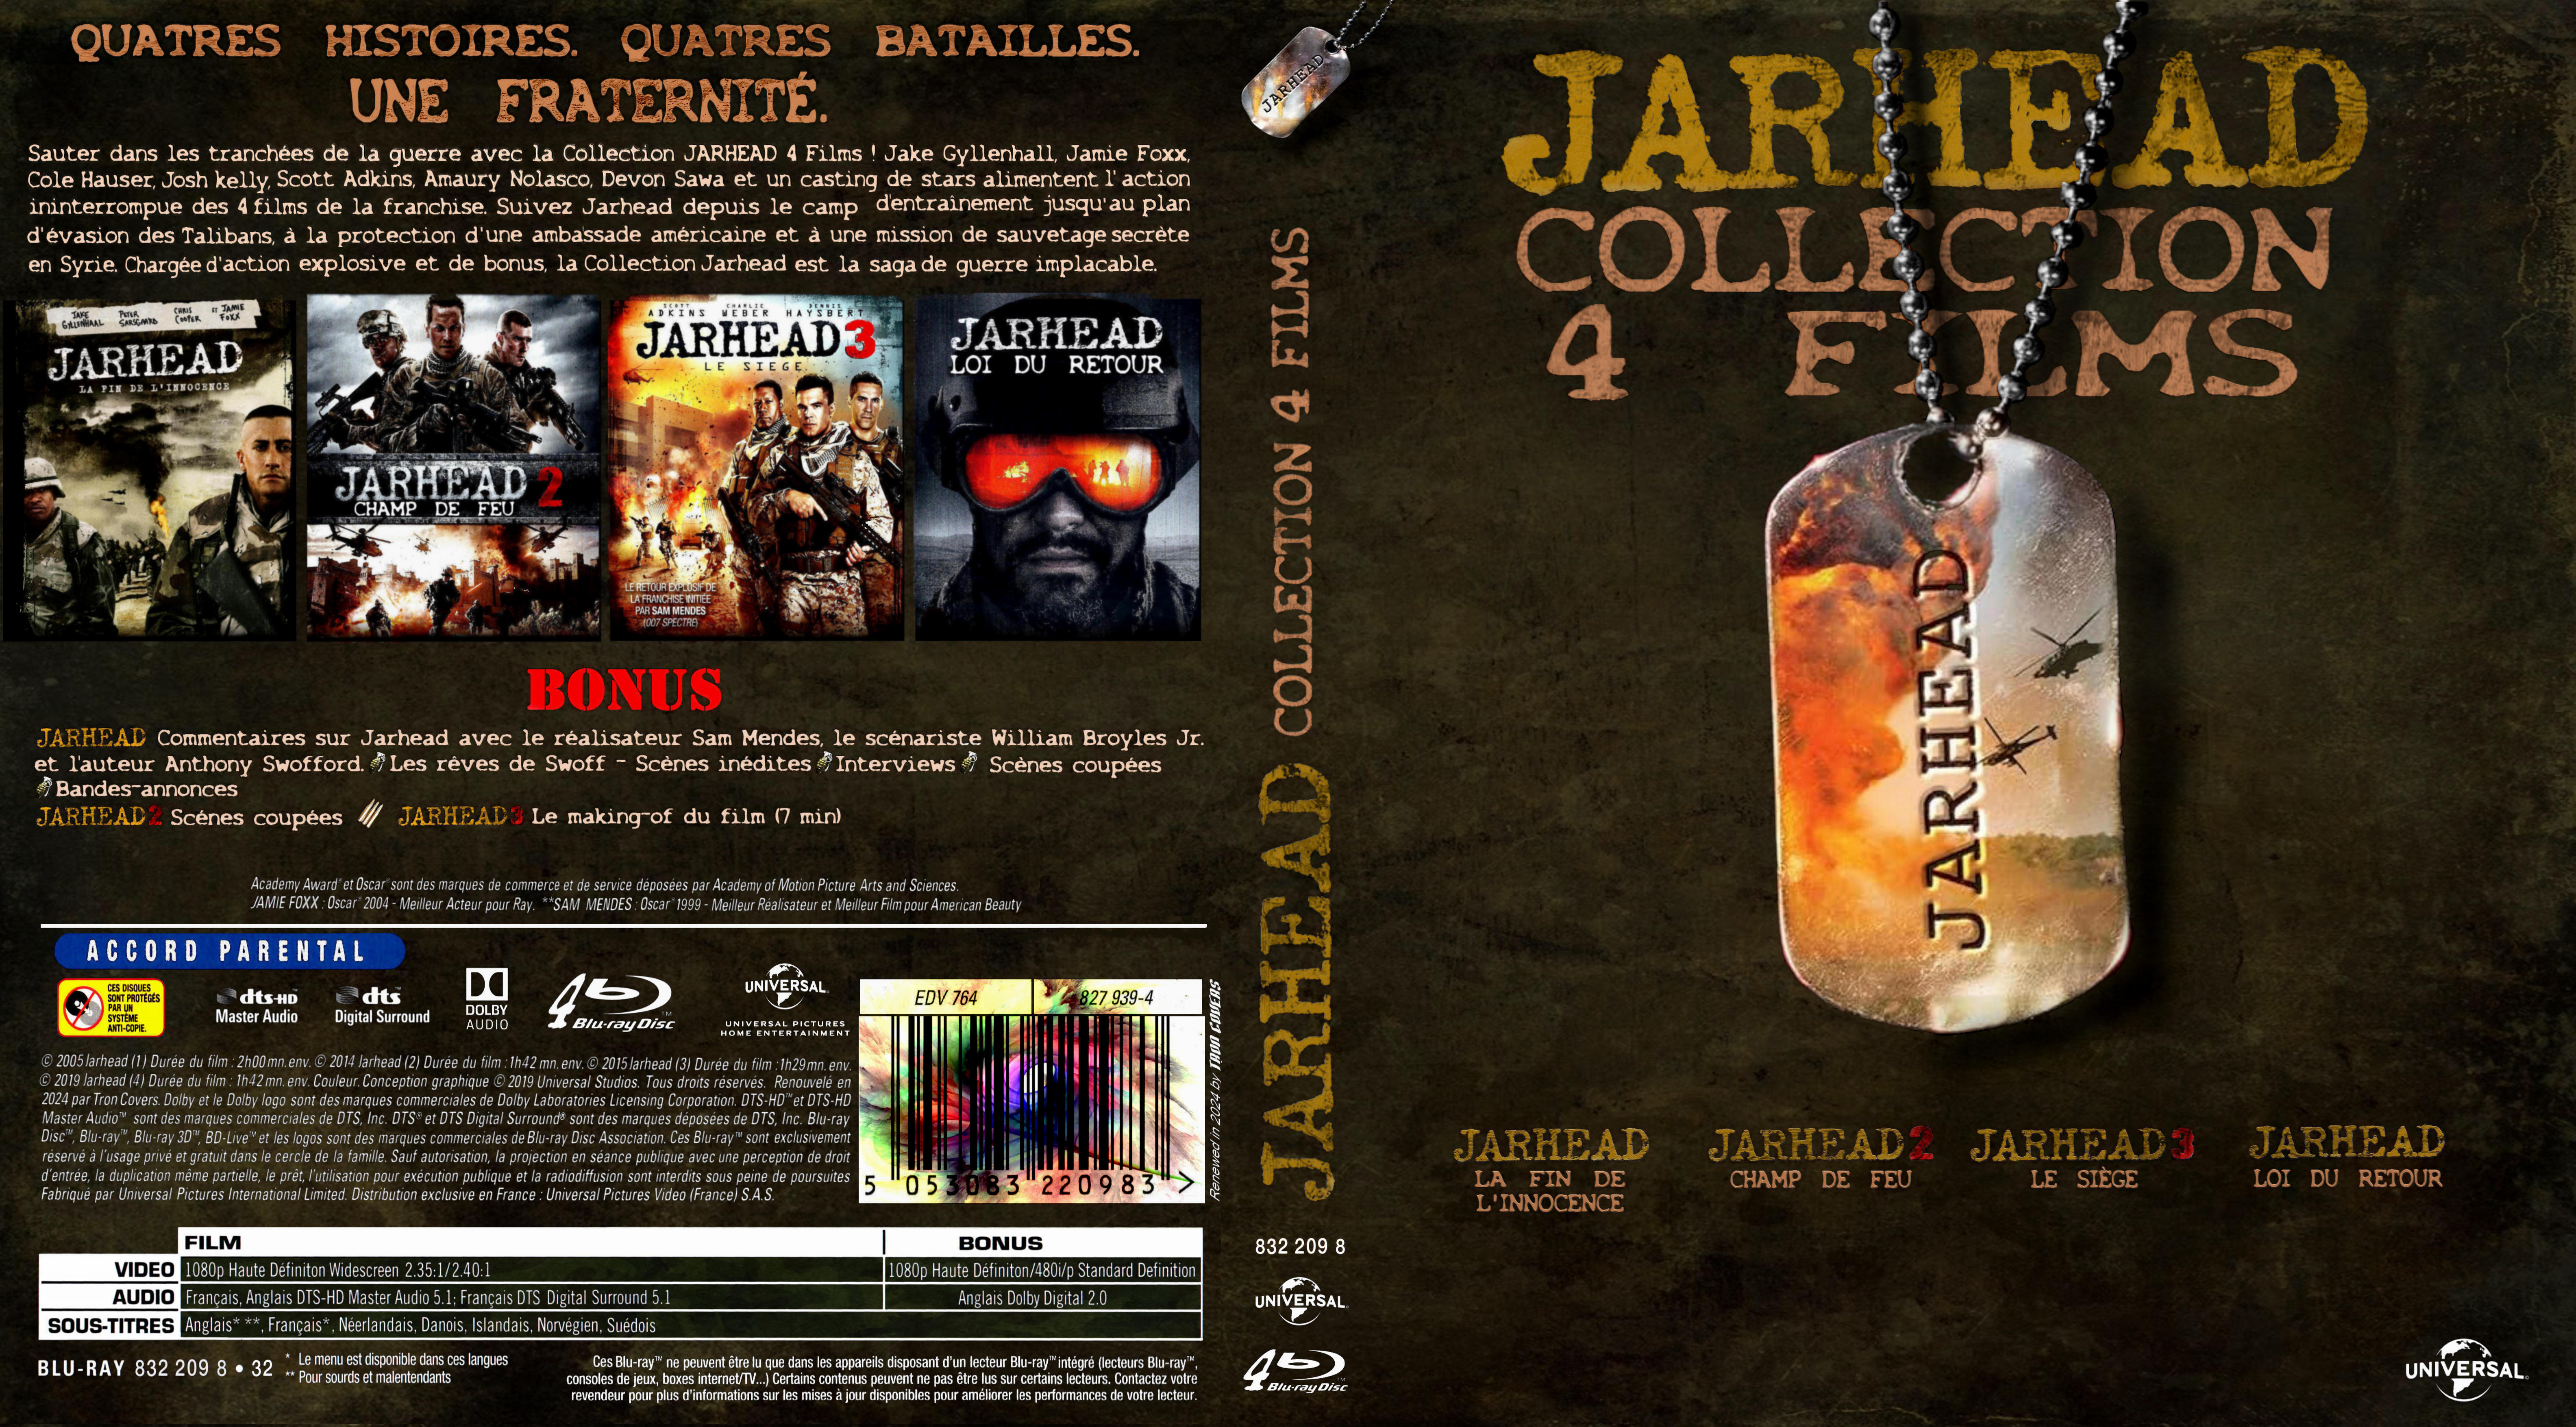 Jaquette DVD Jarhead collection custom